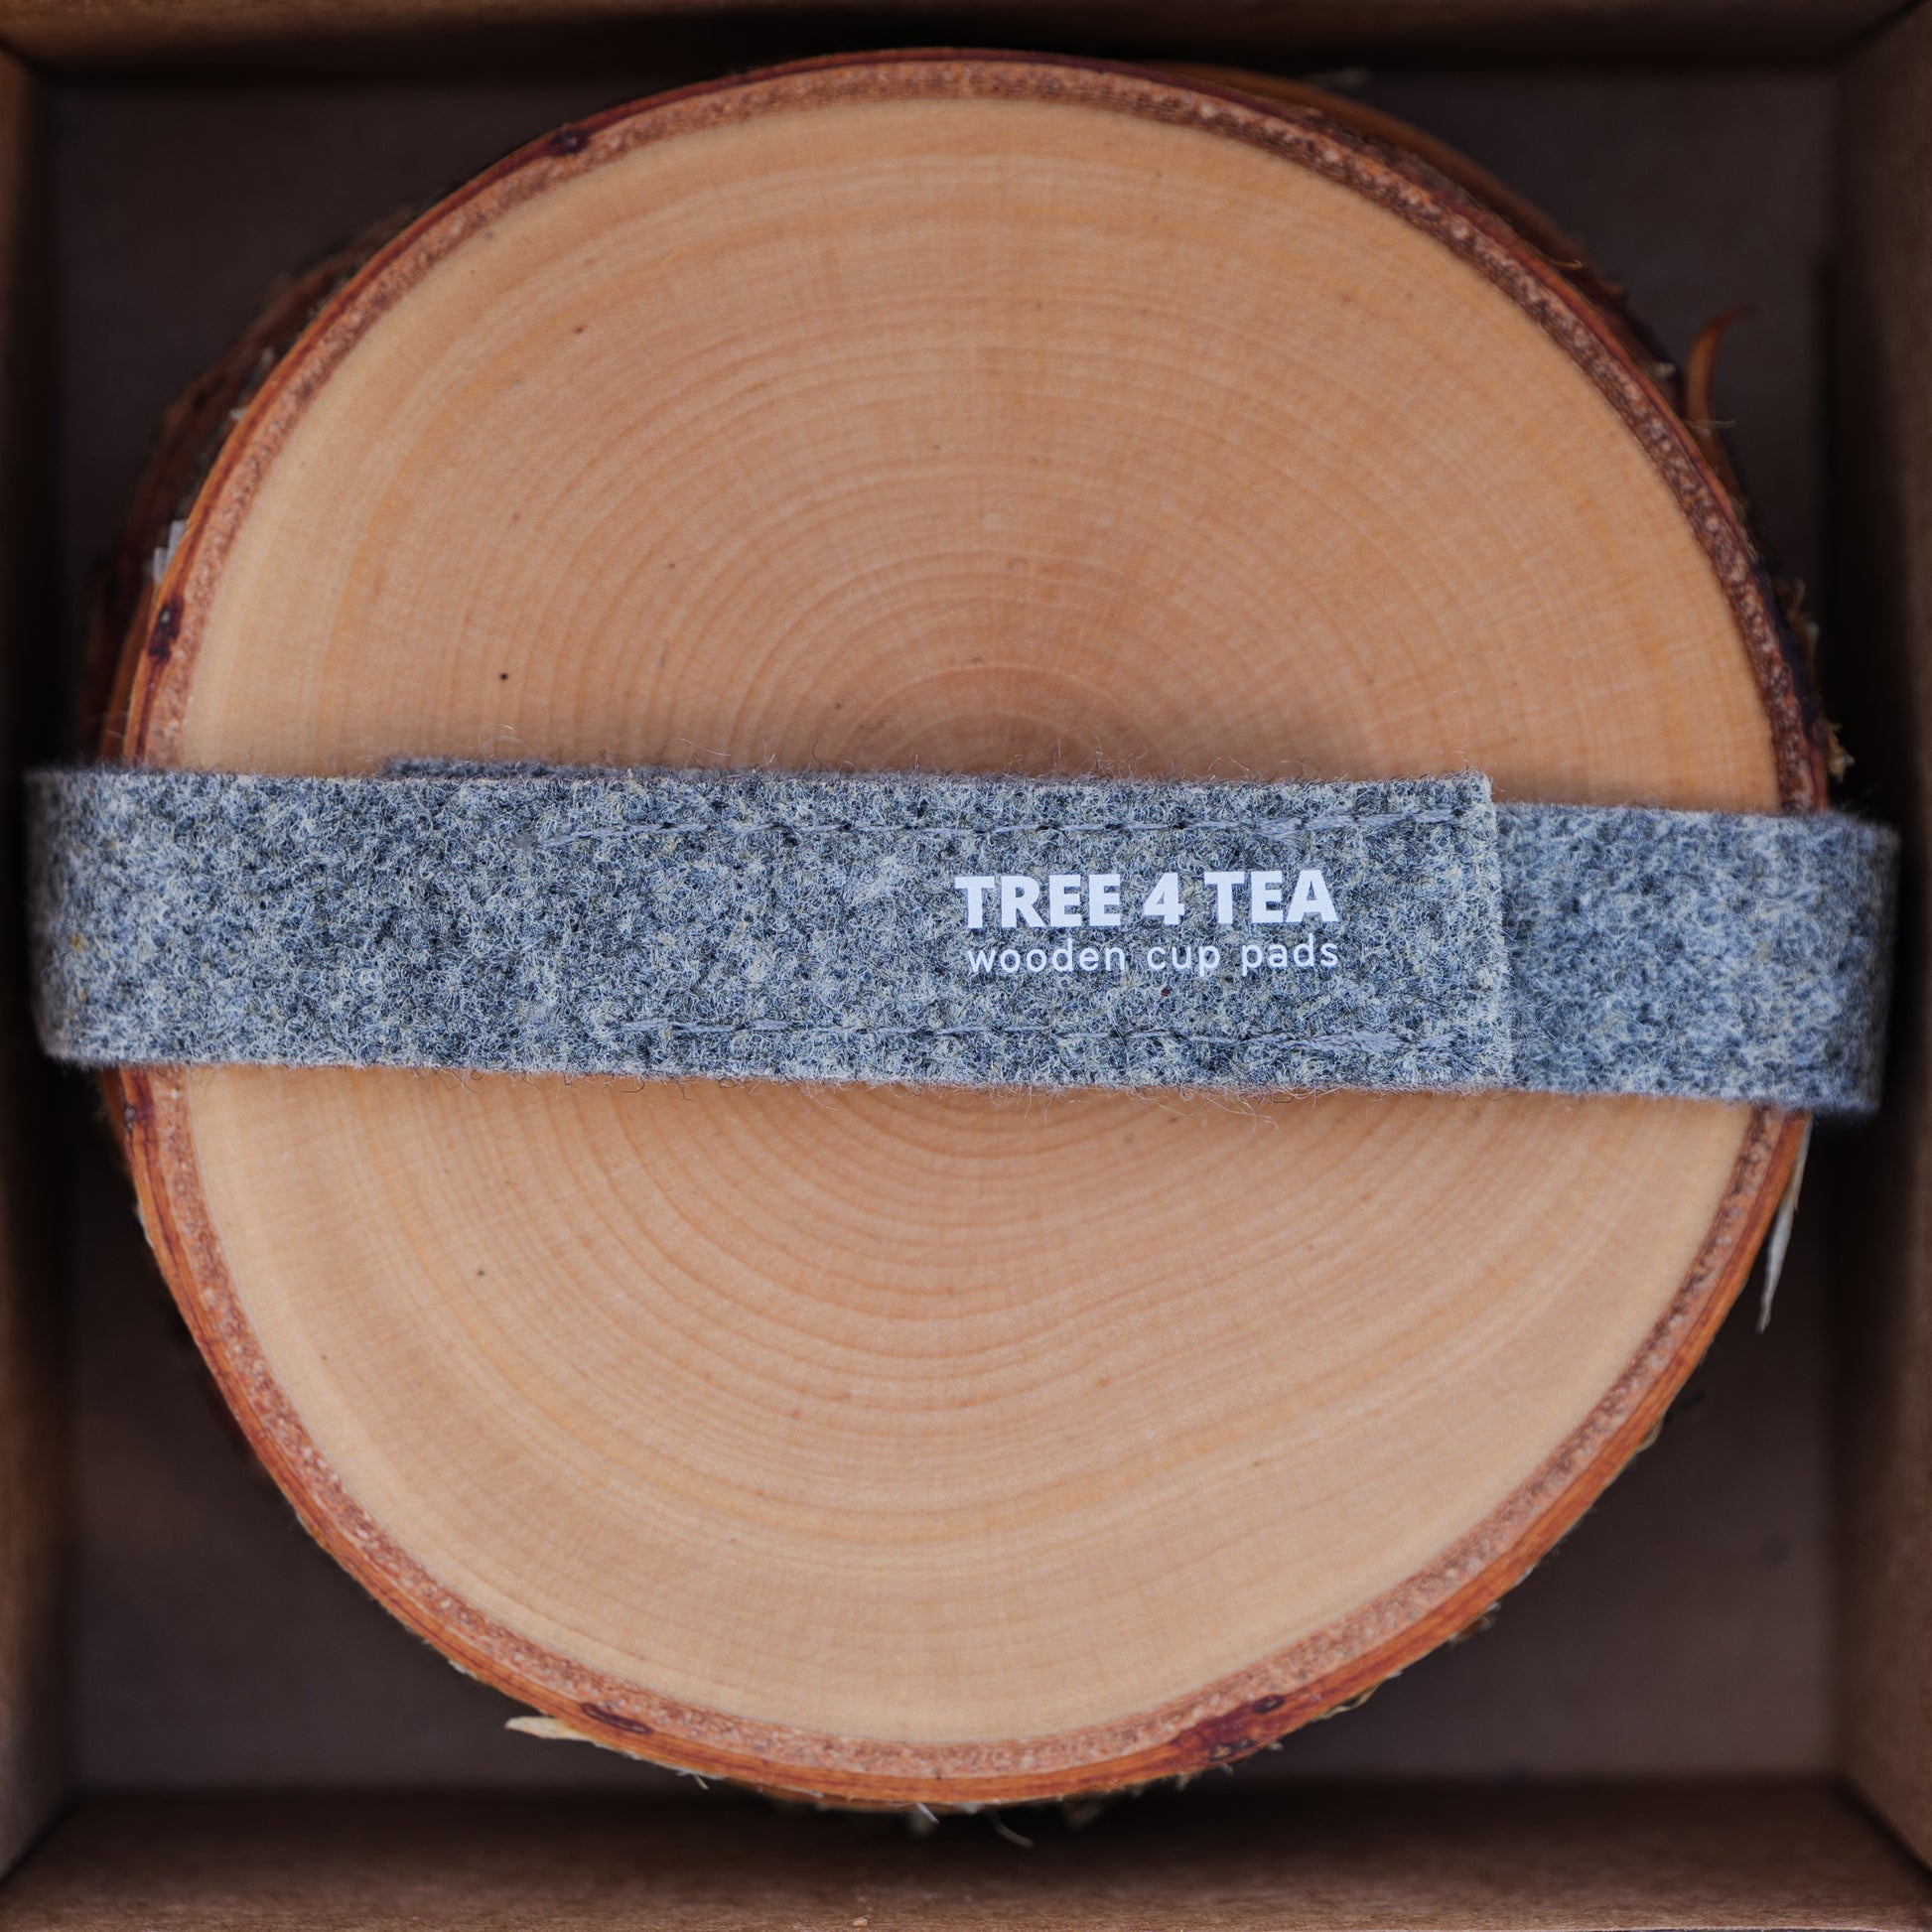 Tree4Tea Wooden cup pads - Rio Lindo